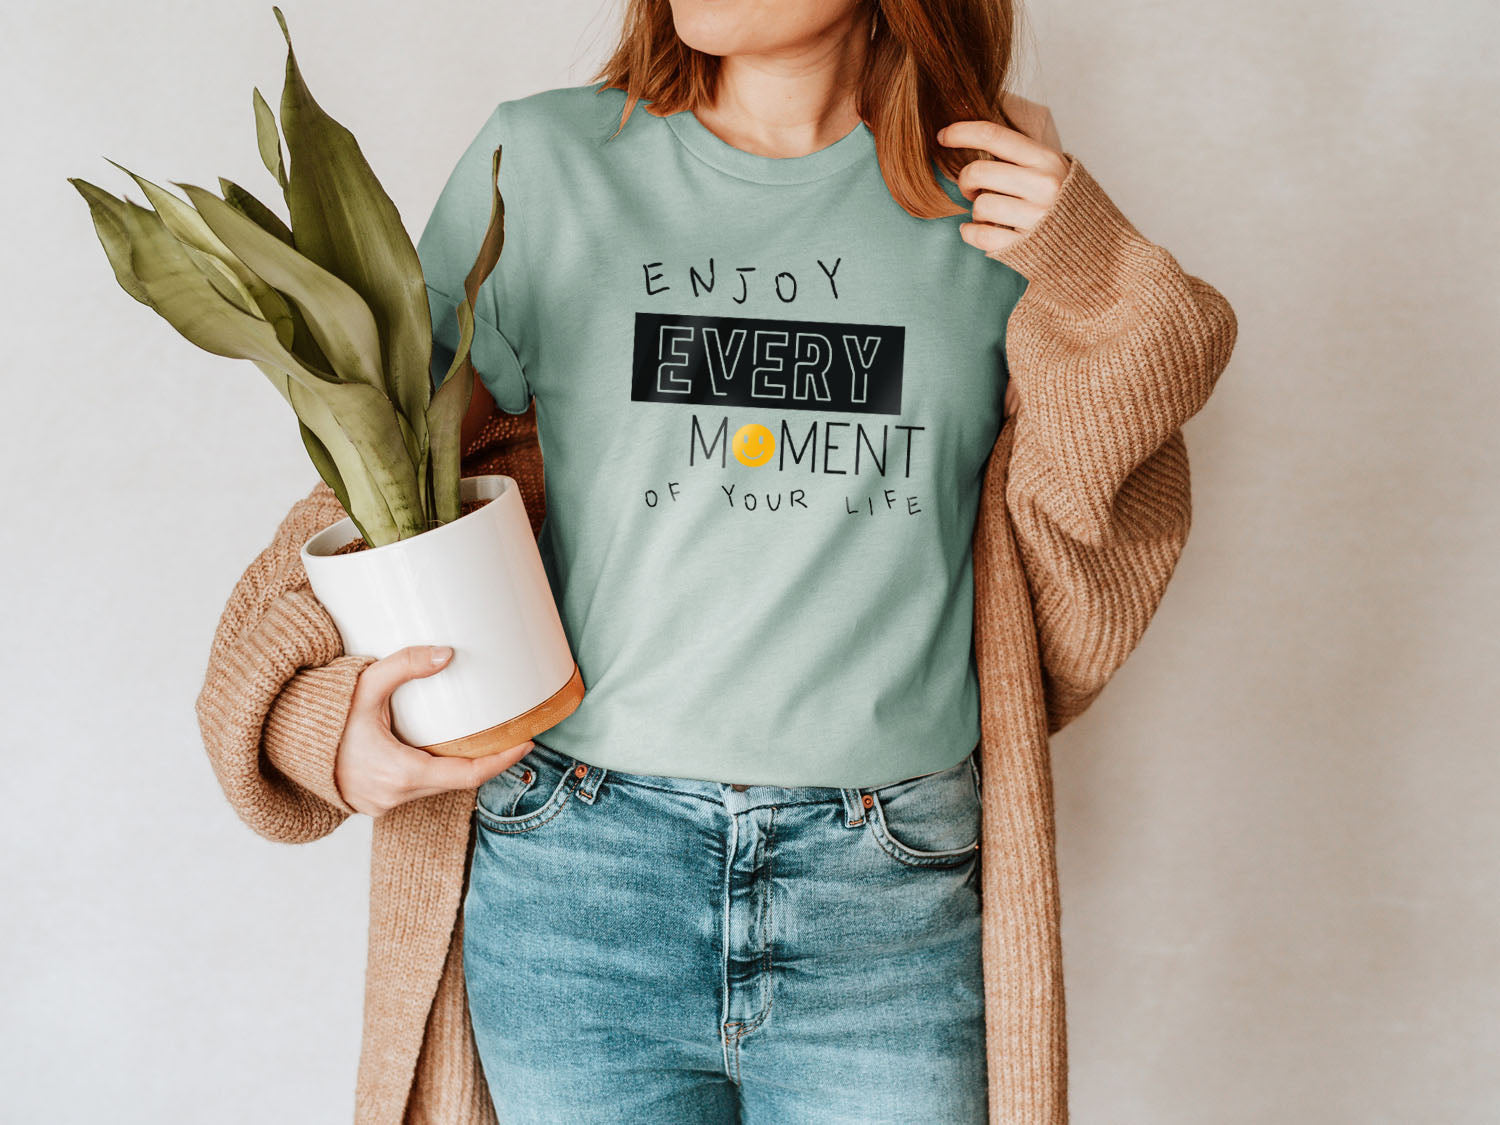 Enjoy Every Moment Of Your Life T-shirt - Fun Relax Motivation Inspiring Design Printed Tee Shirt